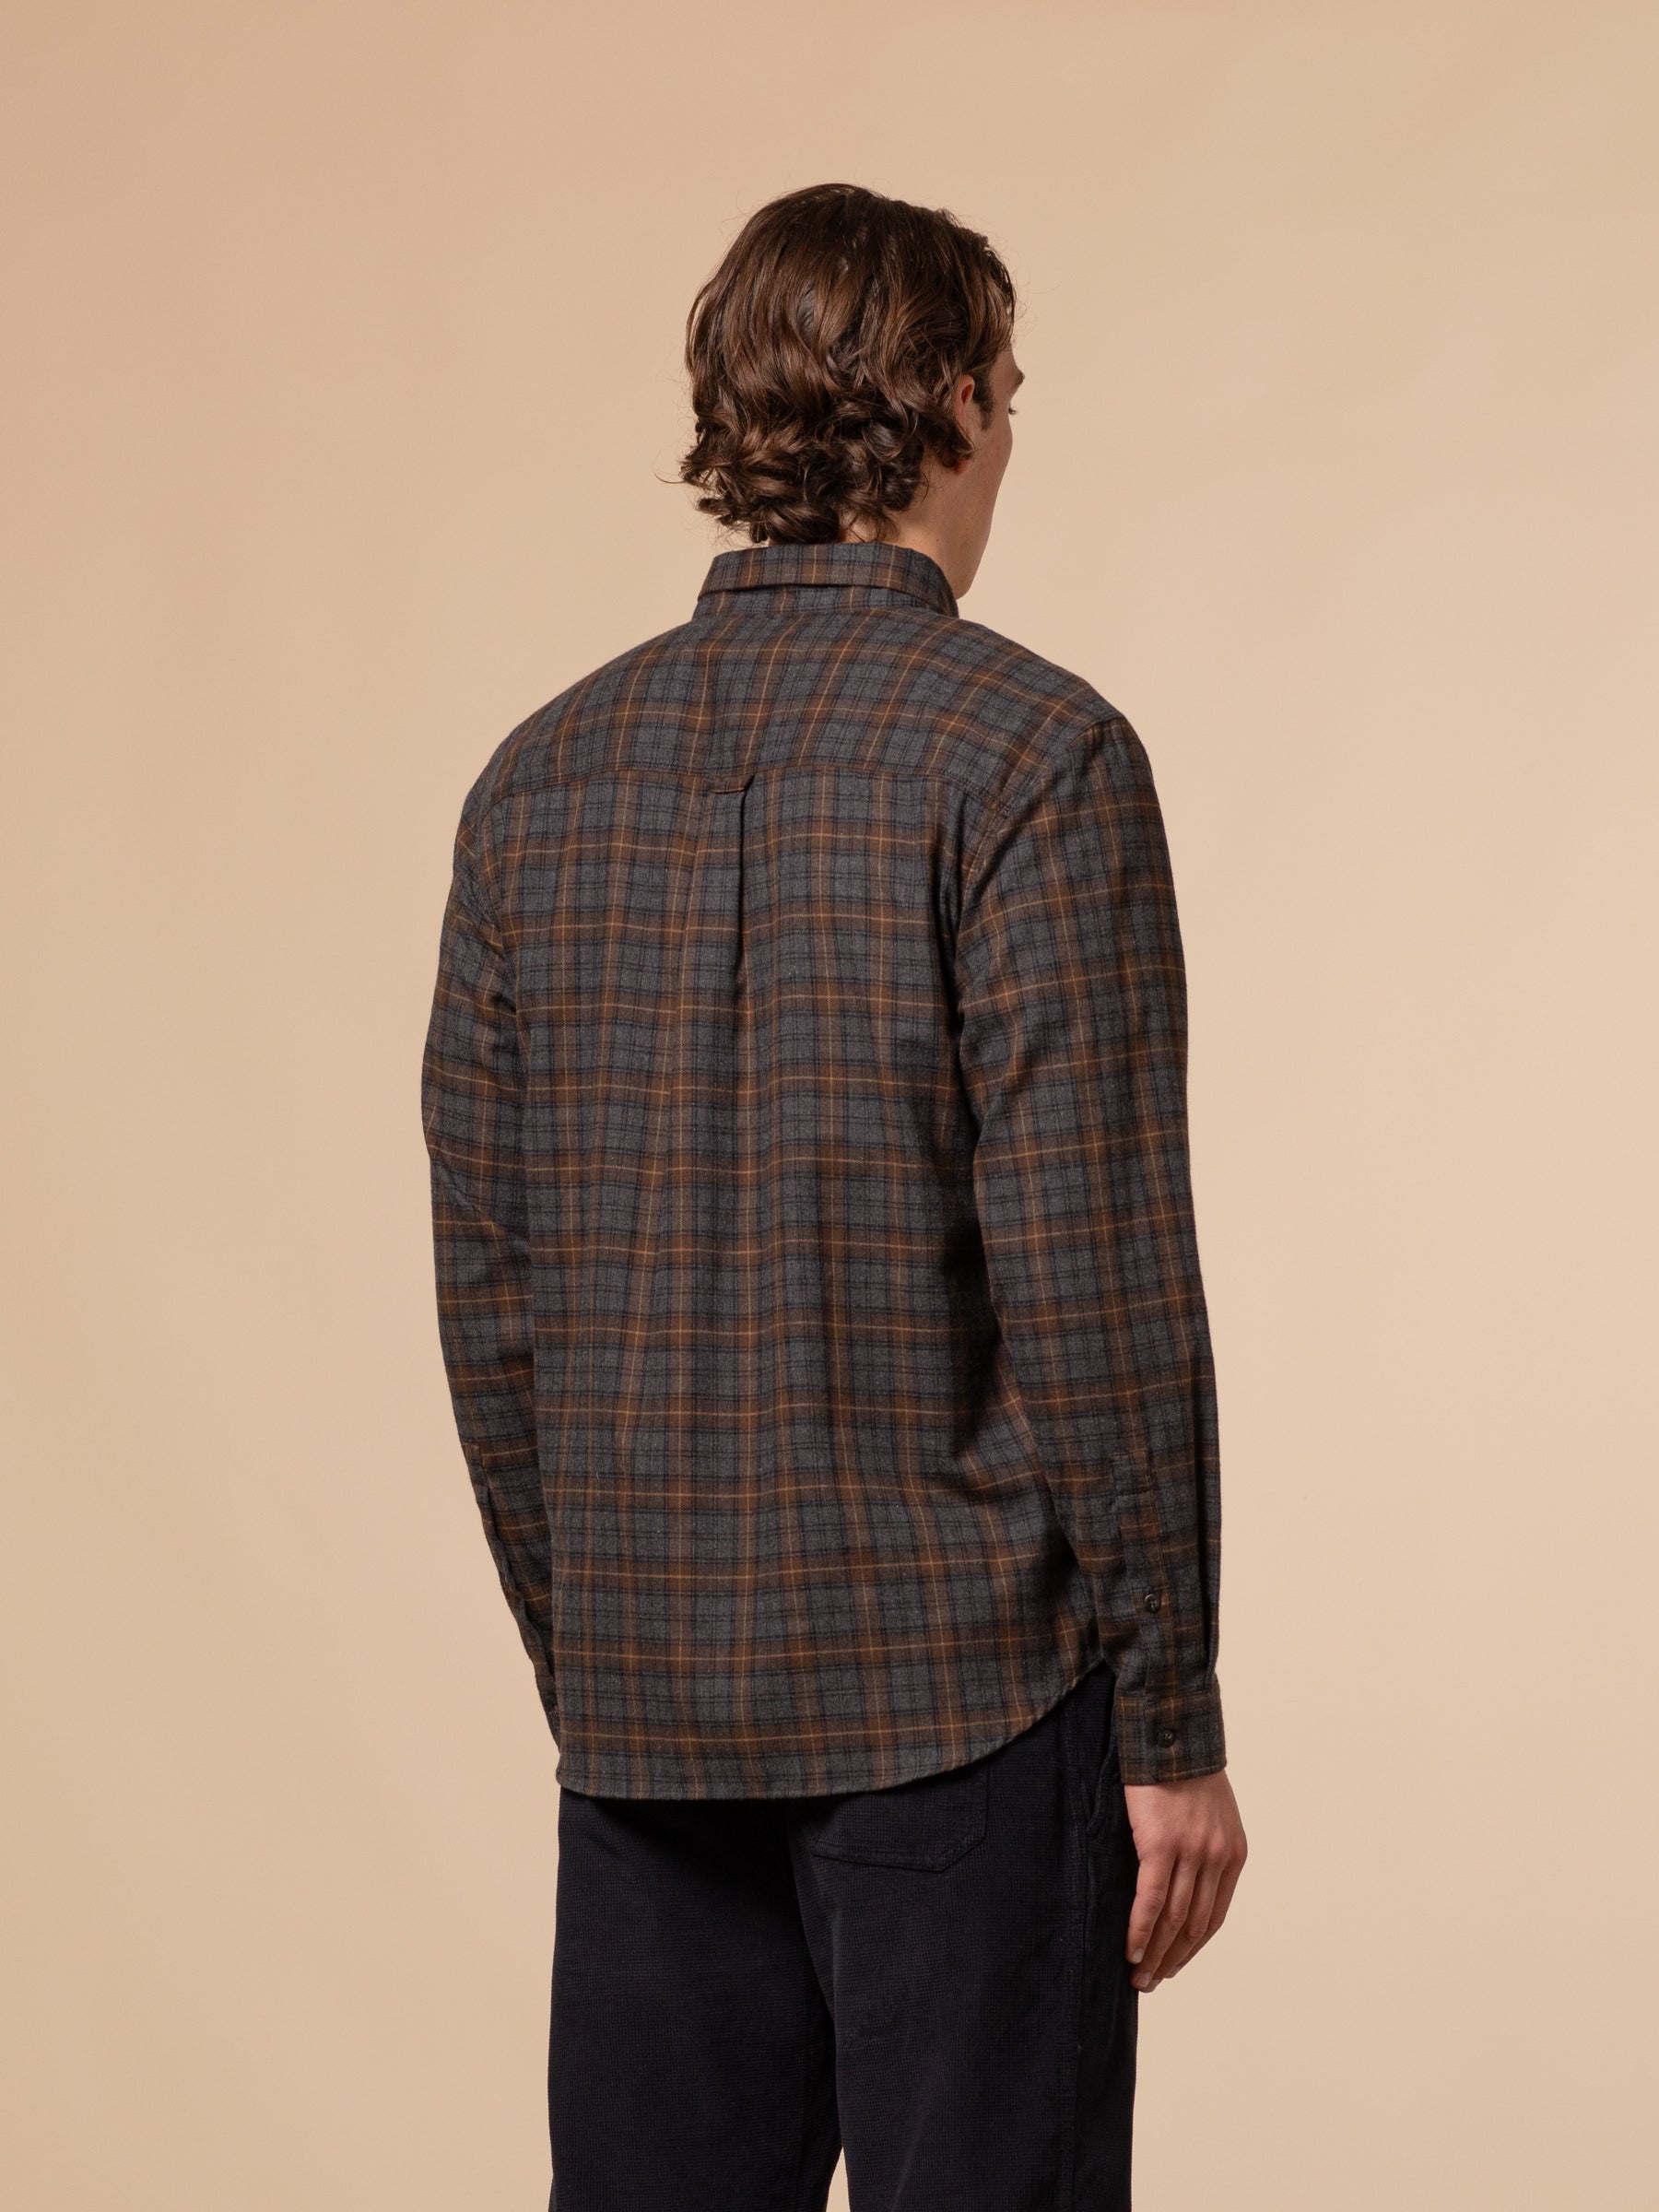 The back profile of the KESTIN Raeburn Button Down Shirt in a Grey/Brown plaid check.